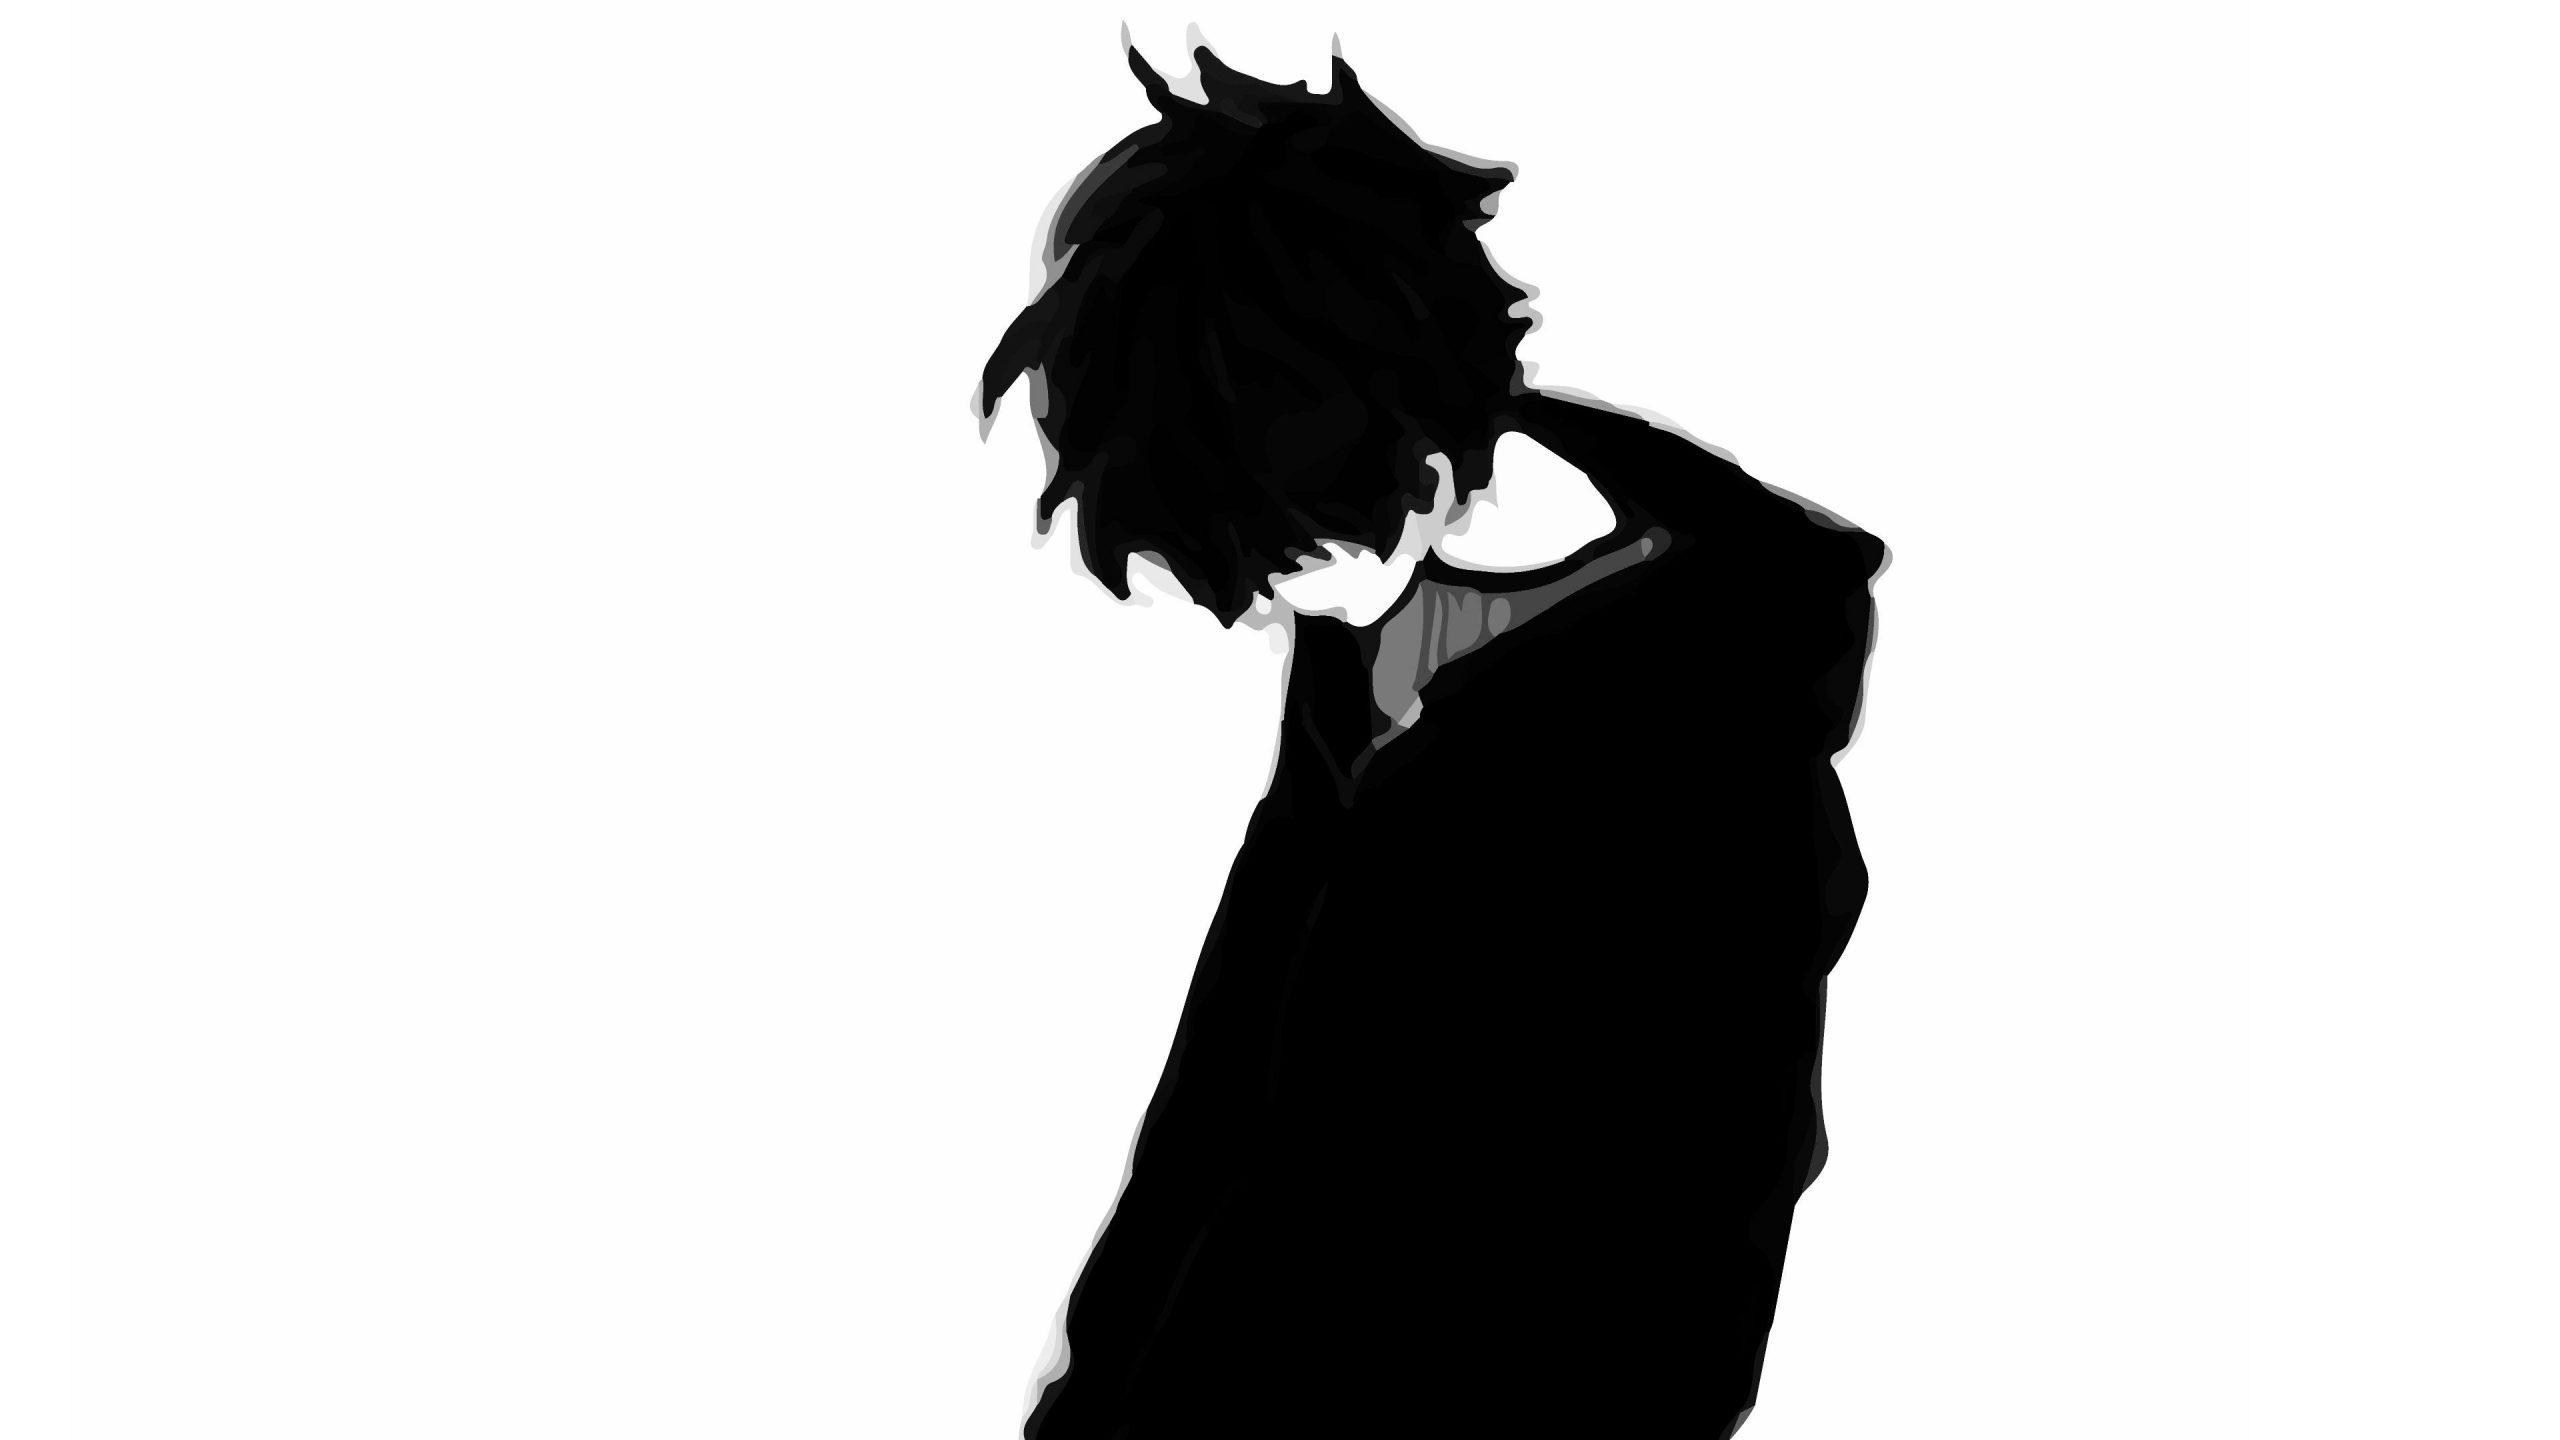 3840x2160 Sad Anime Boy Image. Triste dibujos animados solo foto. Sader. MI  de solo triste anime chicos, Triste - Todo fondos